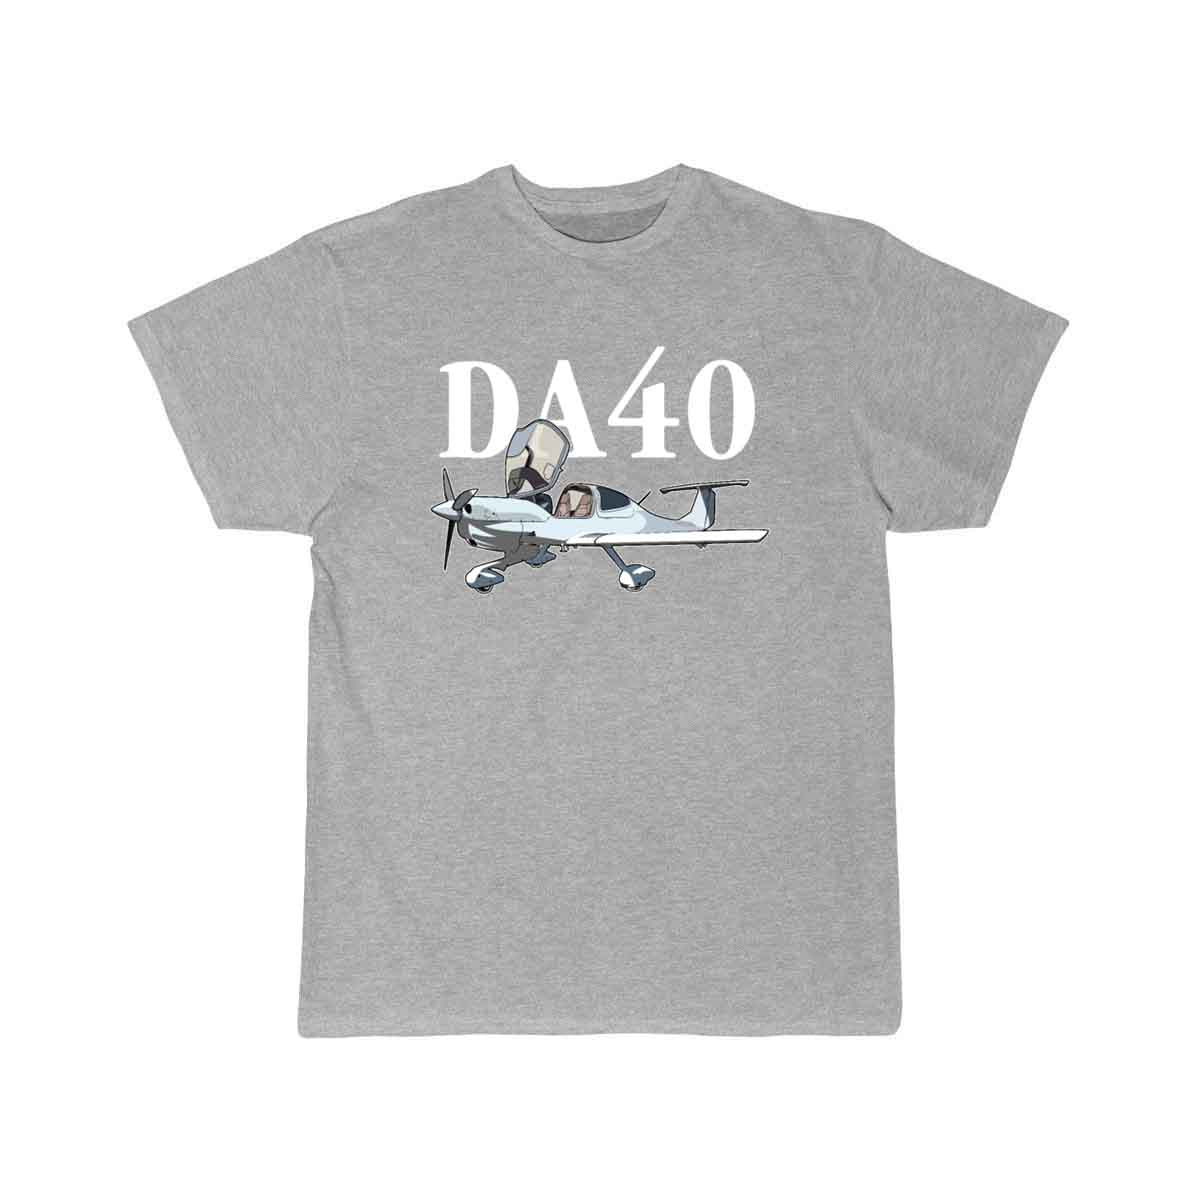 Aircraft DA40 T SHIRT THE AV8R